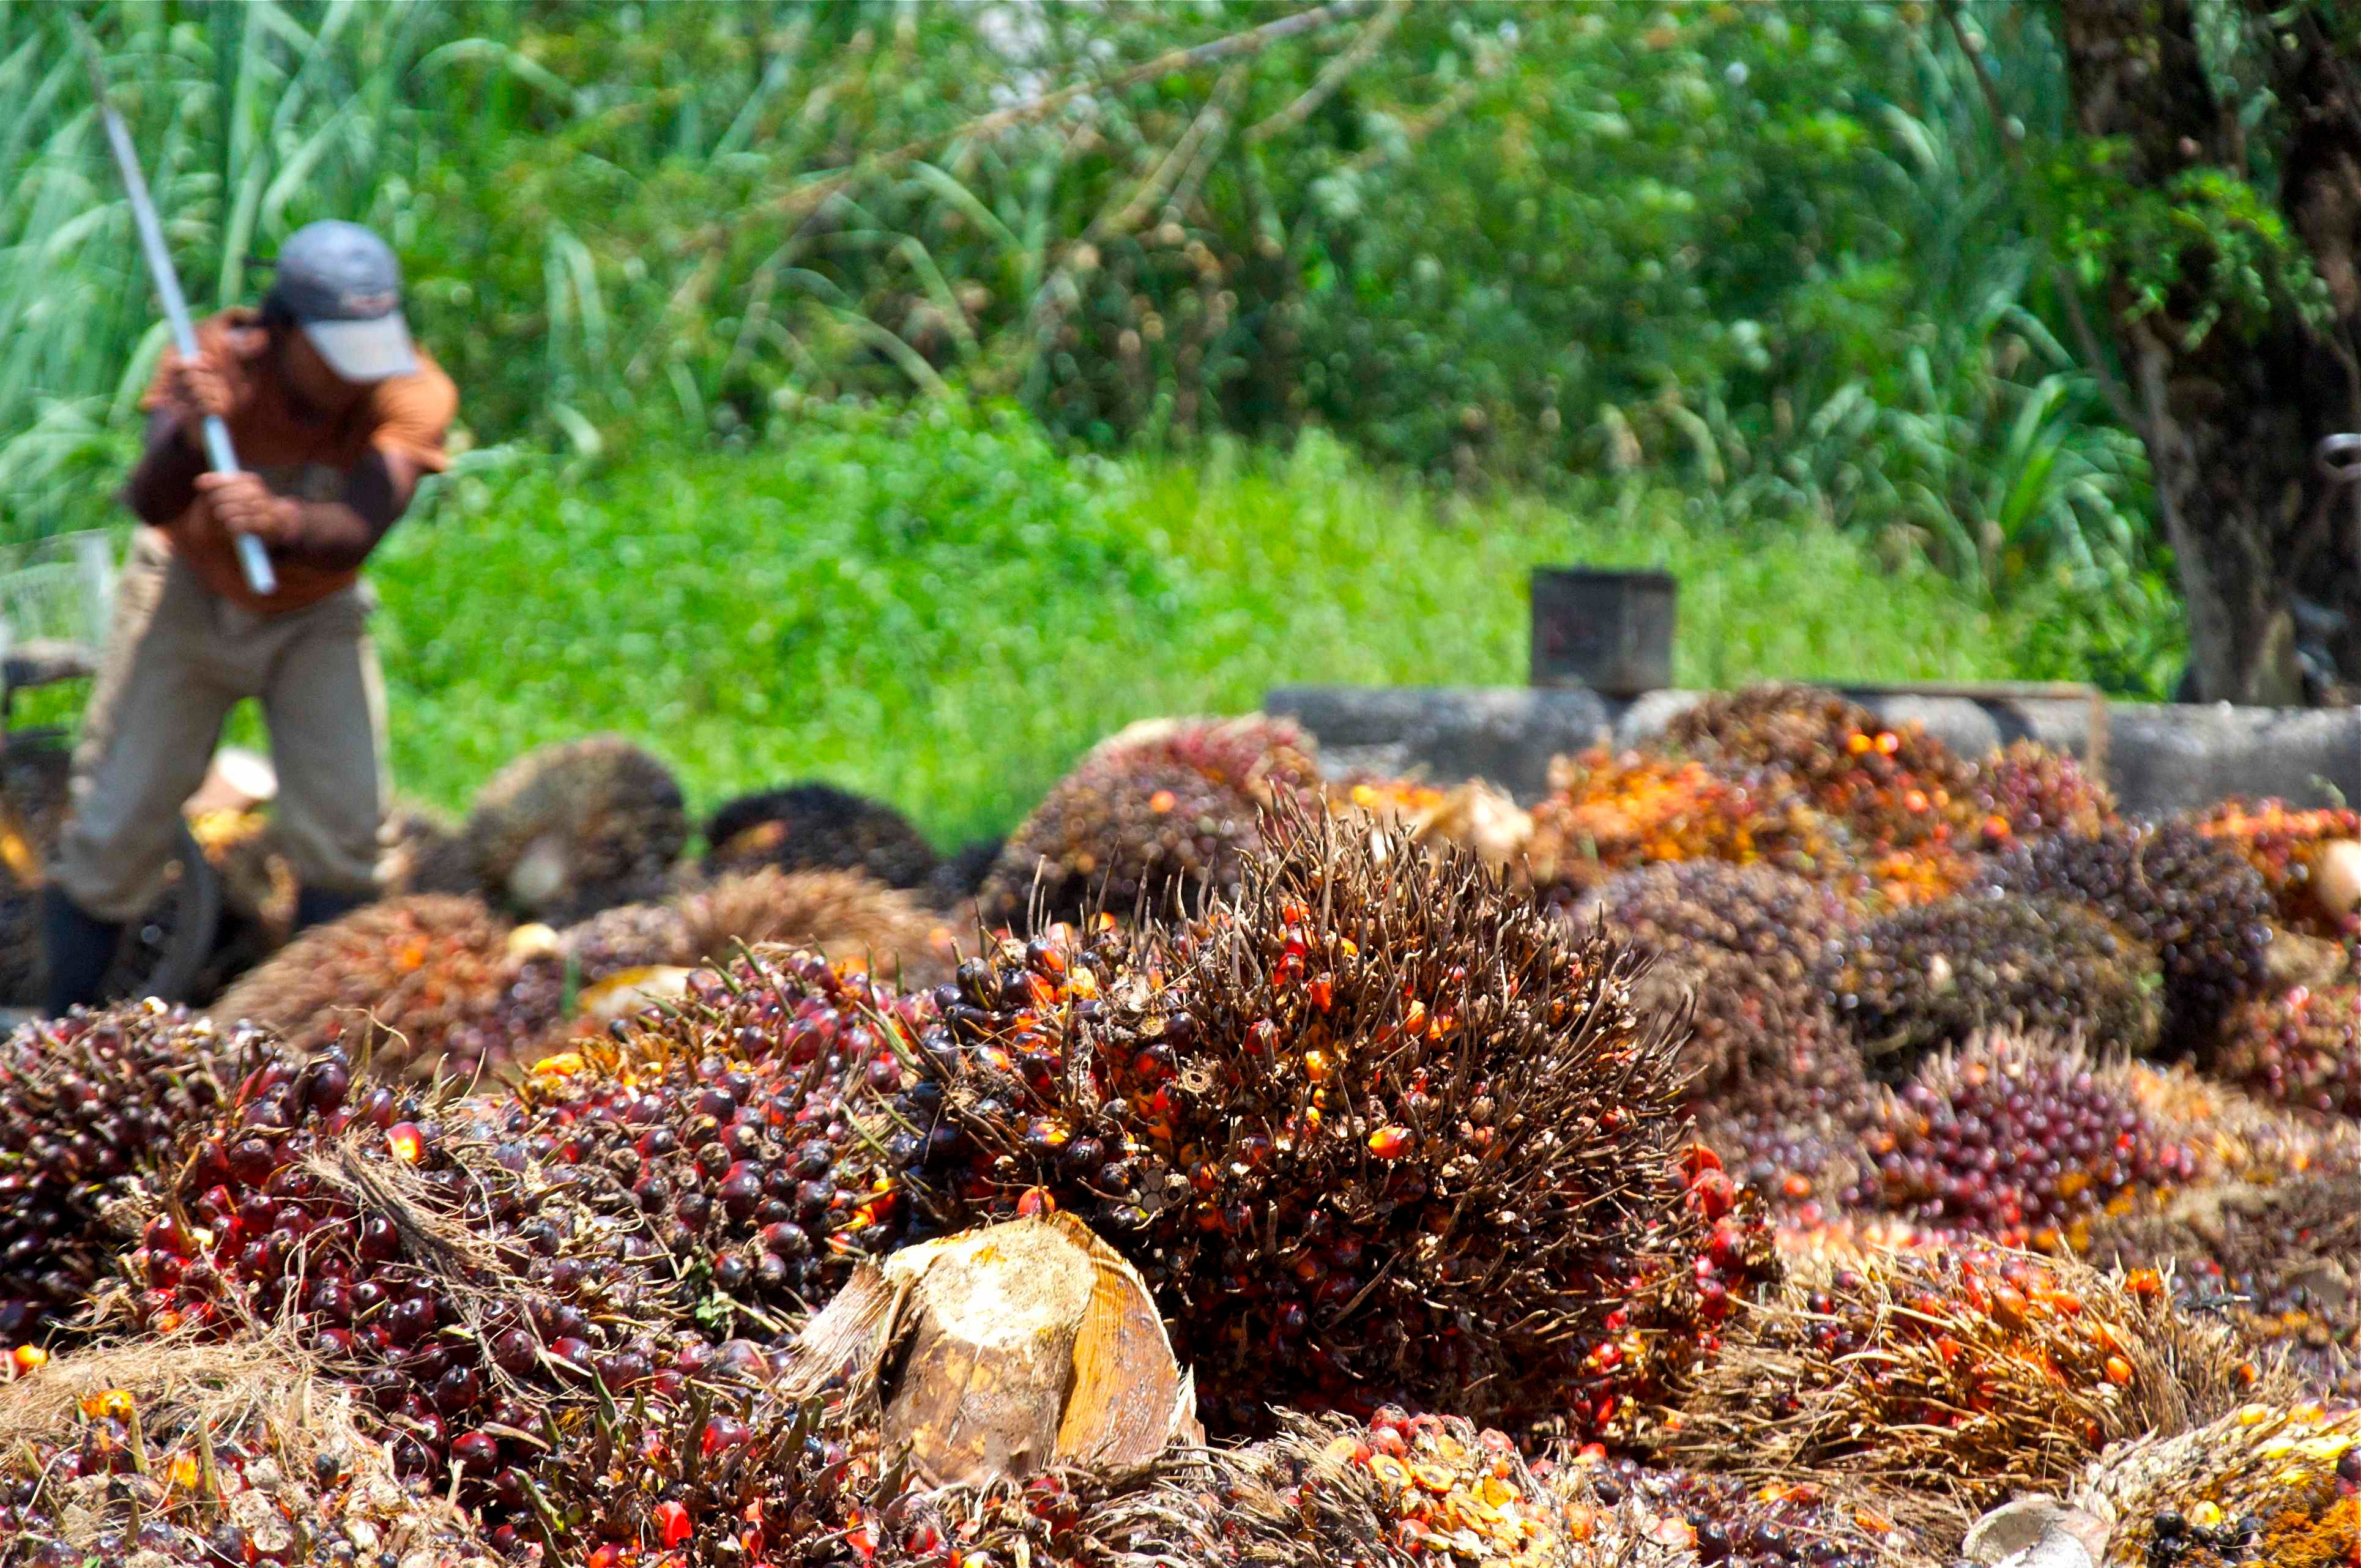 Palm-oil-fruit-harvest-Malaysia.-Photo-by-Craig-Morey.jpg